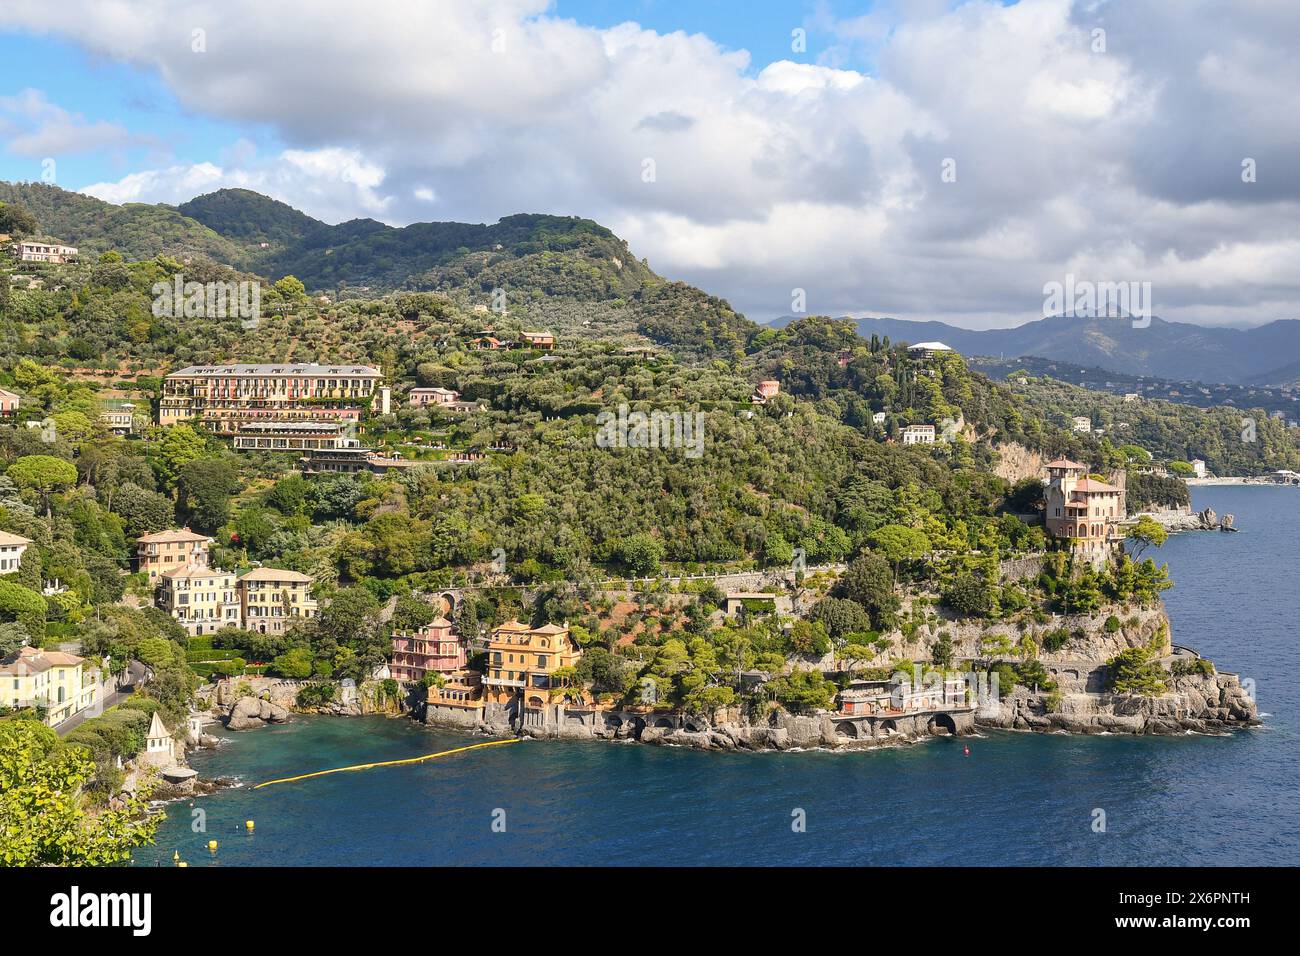 Elevated view of Cannon Bay with the promontory of Punta Cajega, historic villas and the 5 star Belmond Splendido Hotel, Portofino, Genoa, Italy Stock Photo